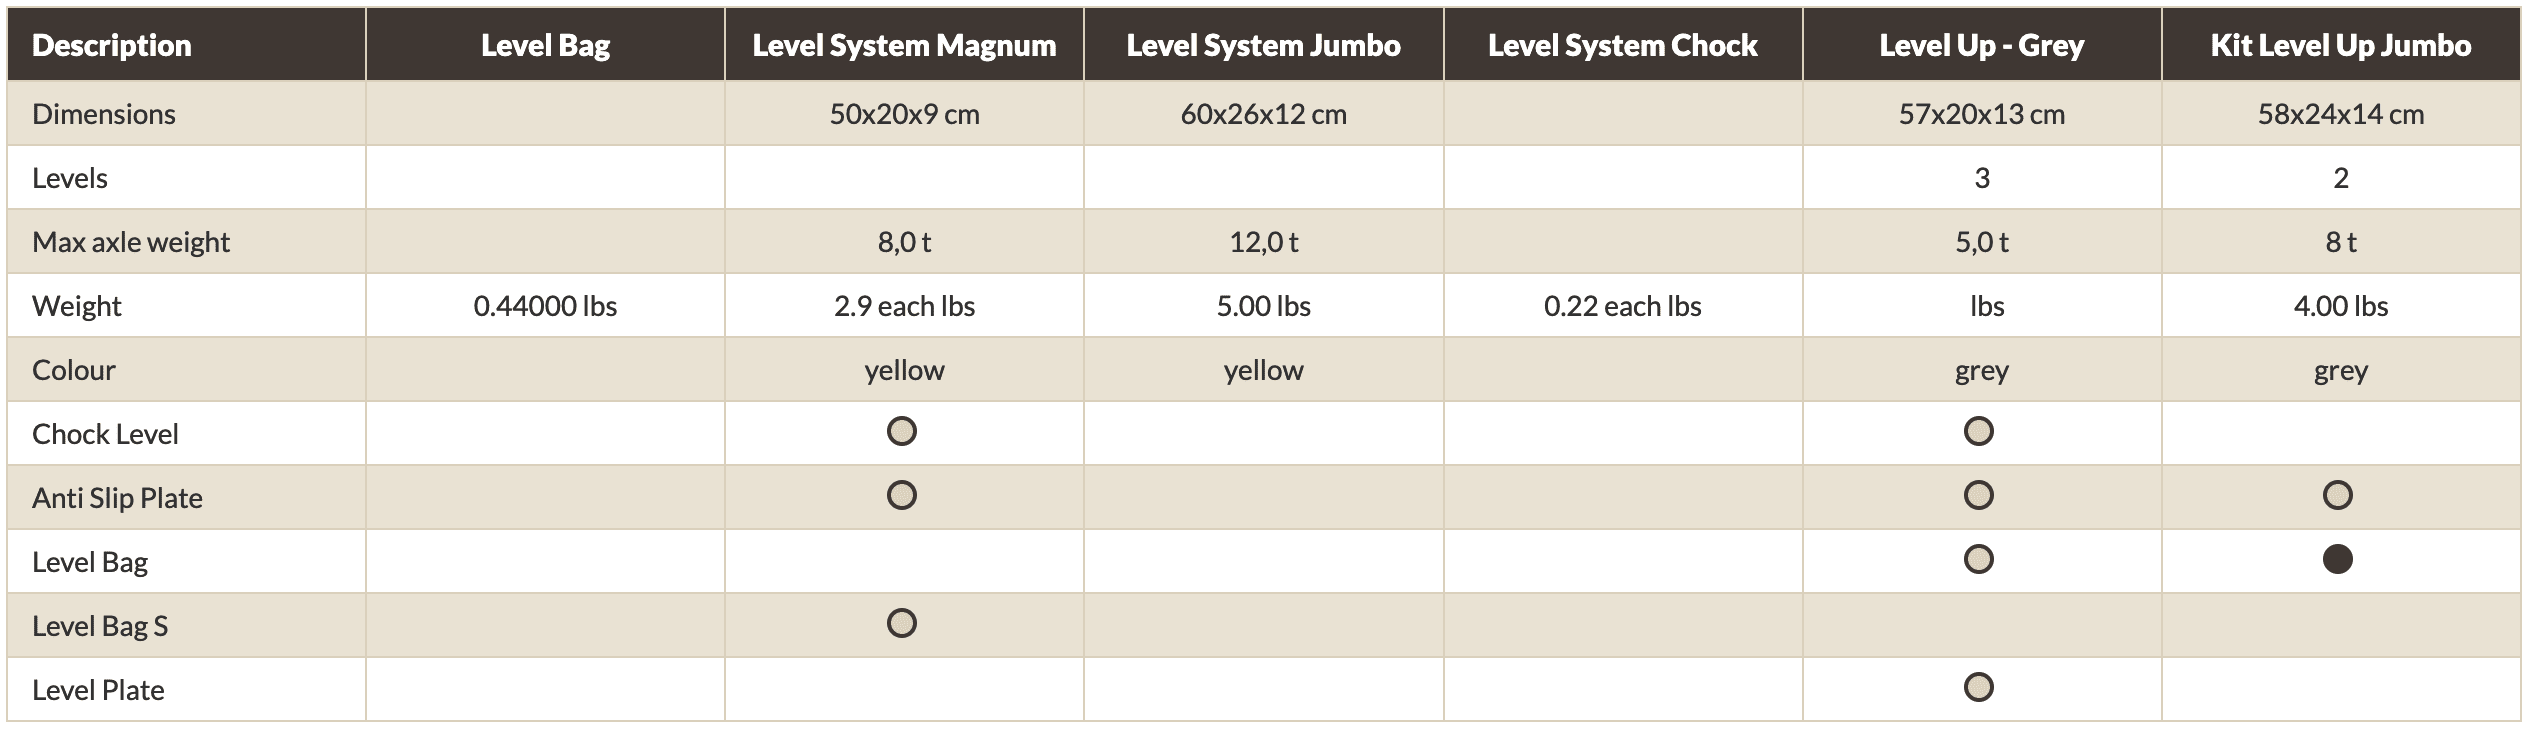 Fiamma Camper Van Leveling System Comparison Chart